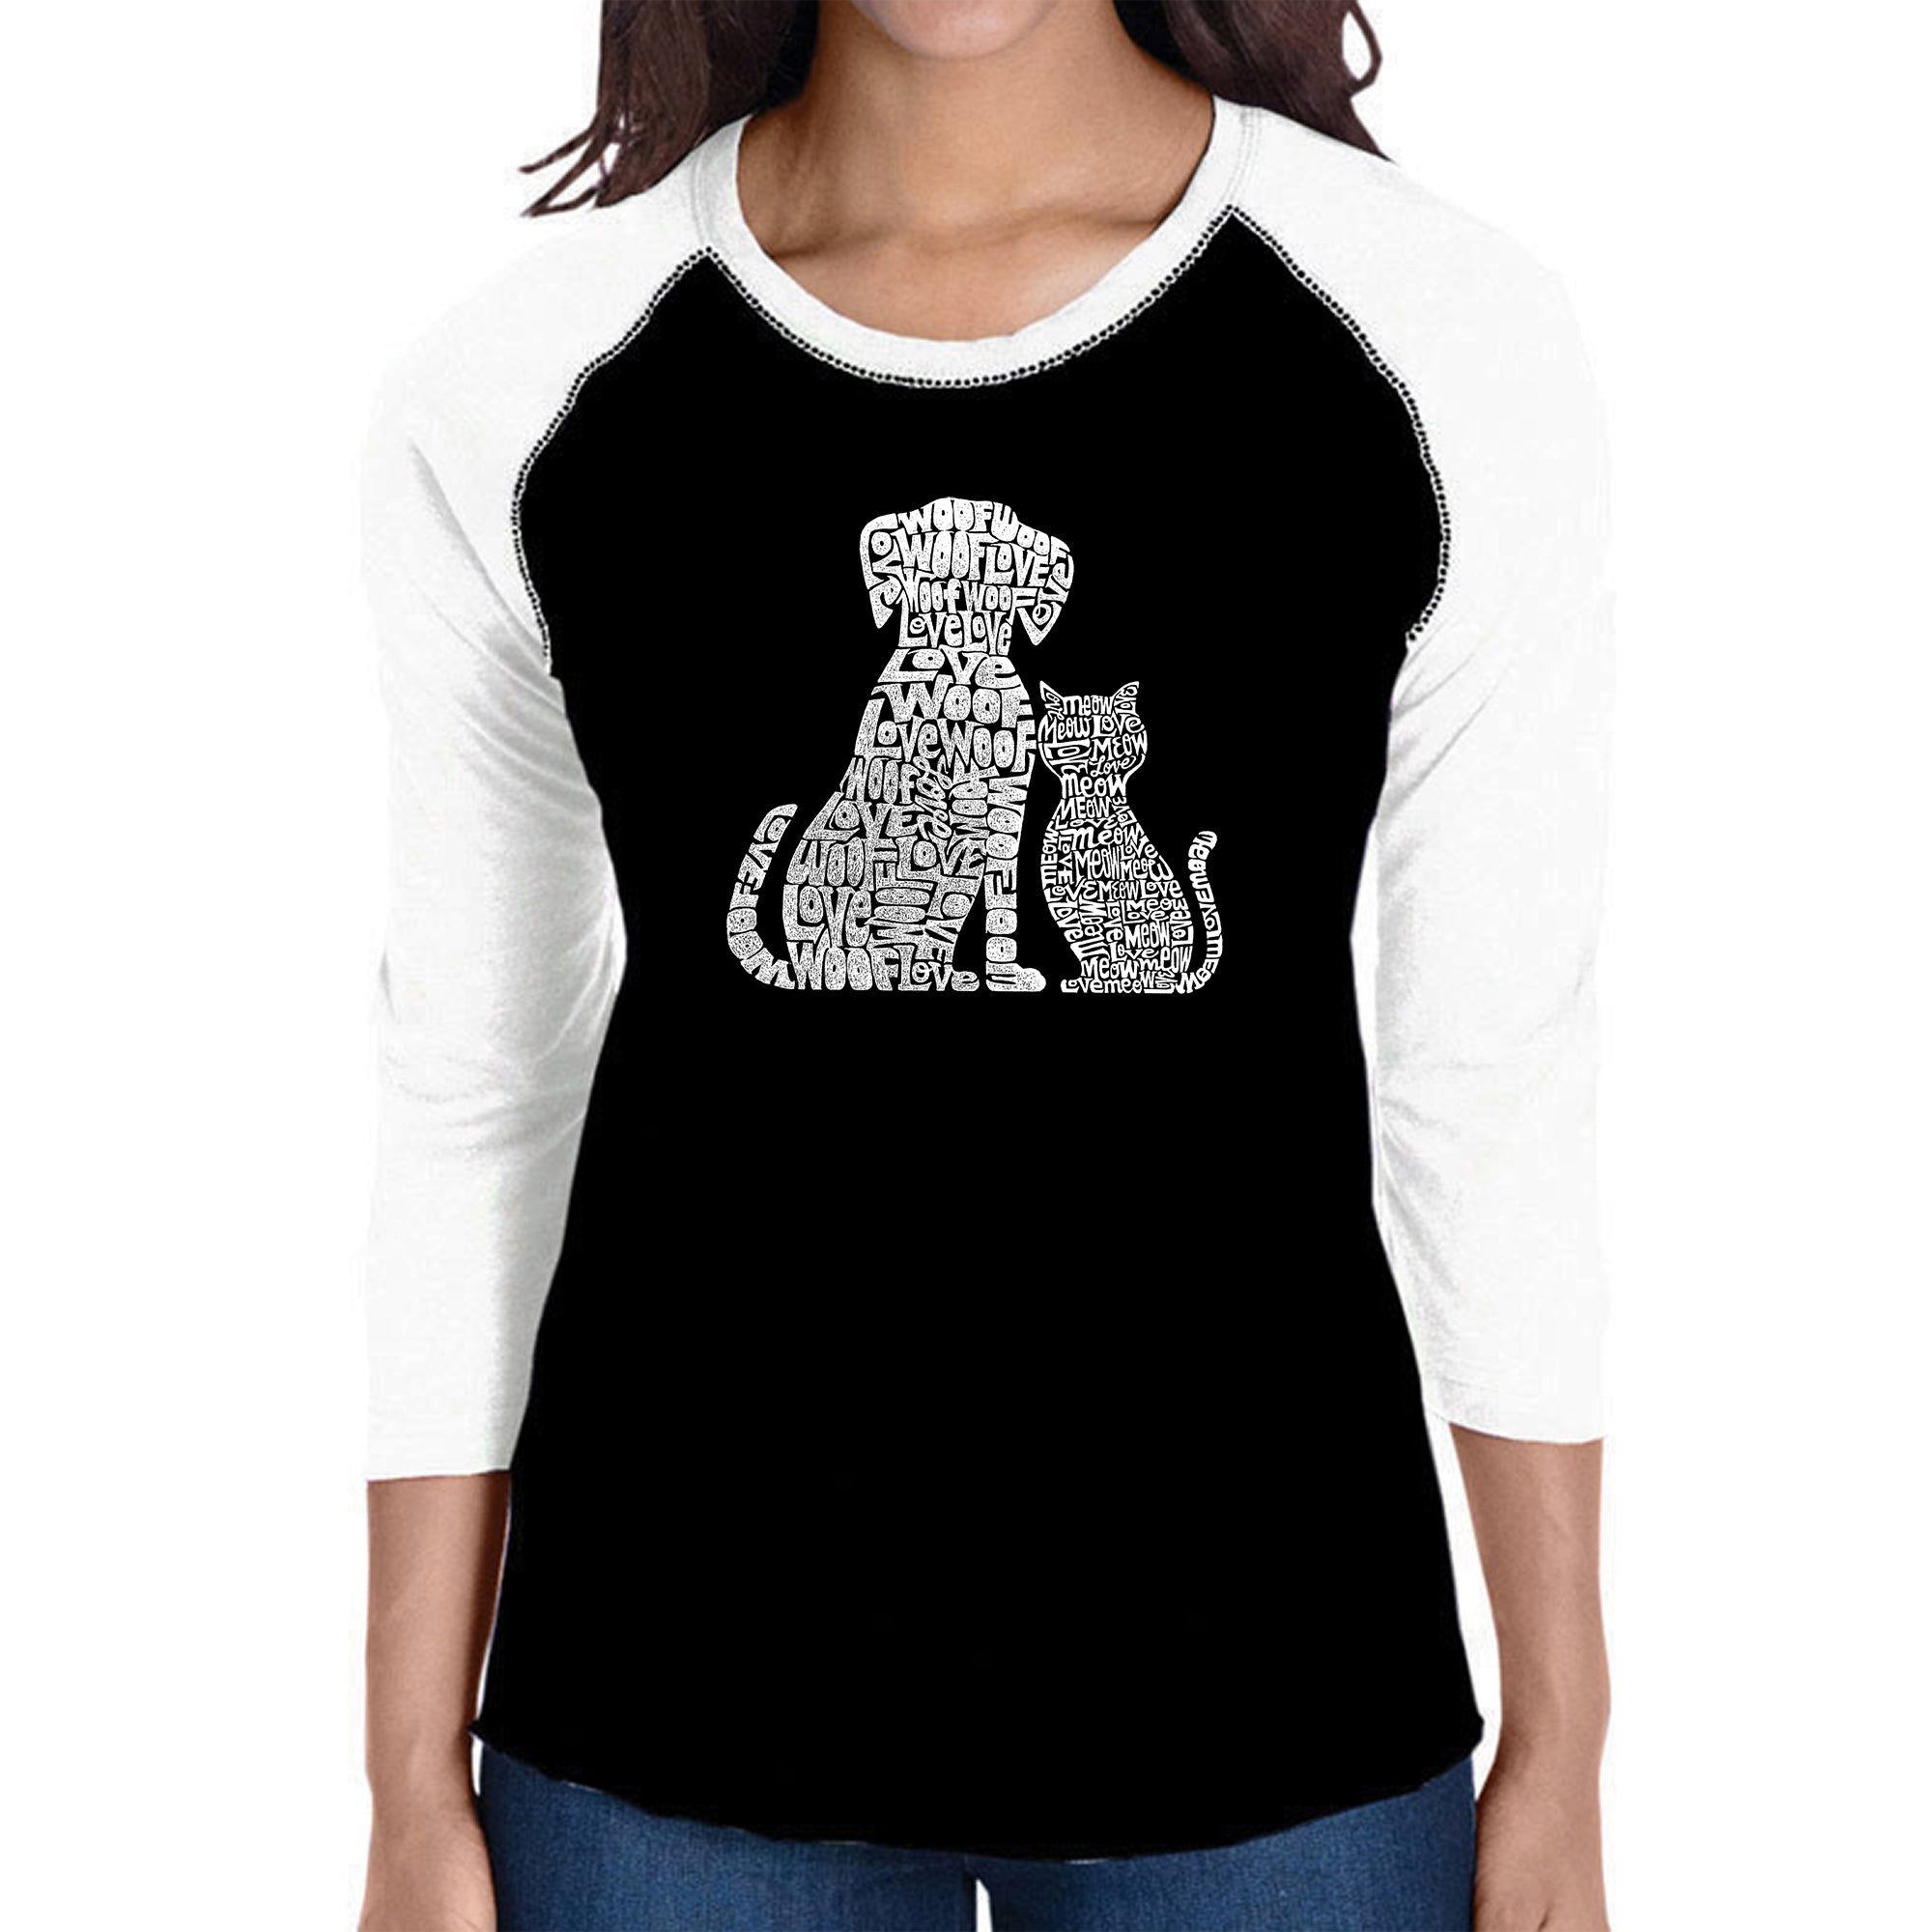 Dogs And Cats - Women's Raglan Baseball Word Art T-Shirt - Black/White - Small